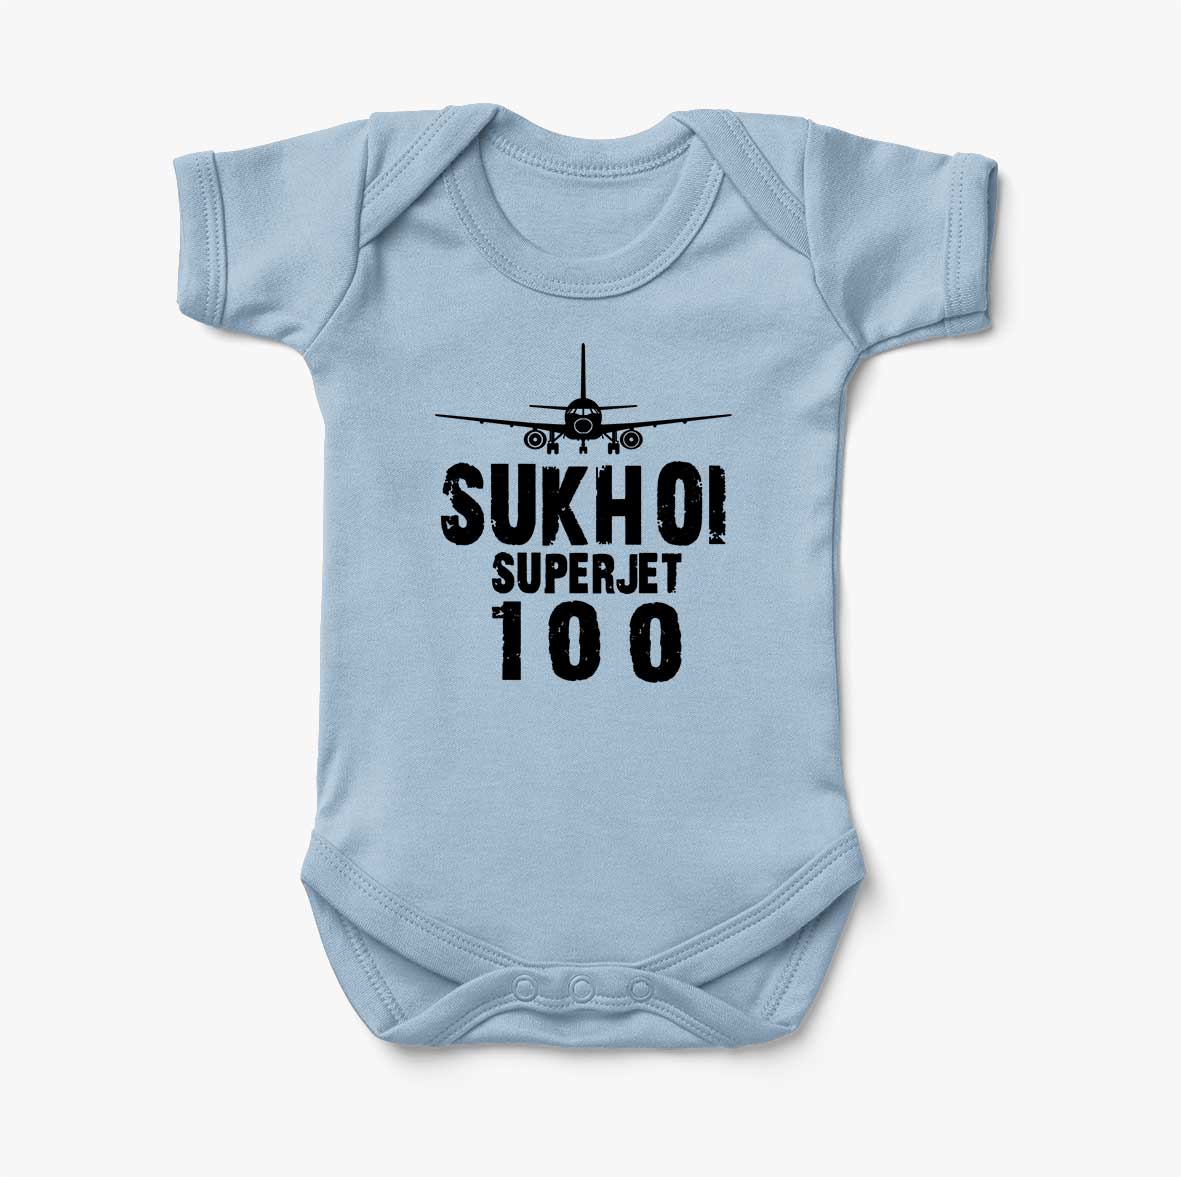 Sukhoi Superjet 100 & Plane Designed Baby Bodysuits